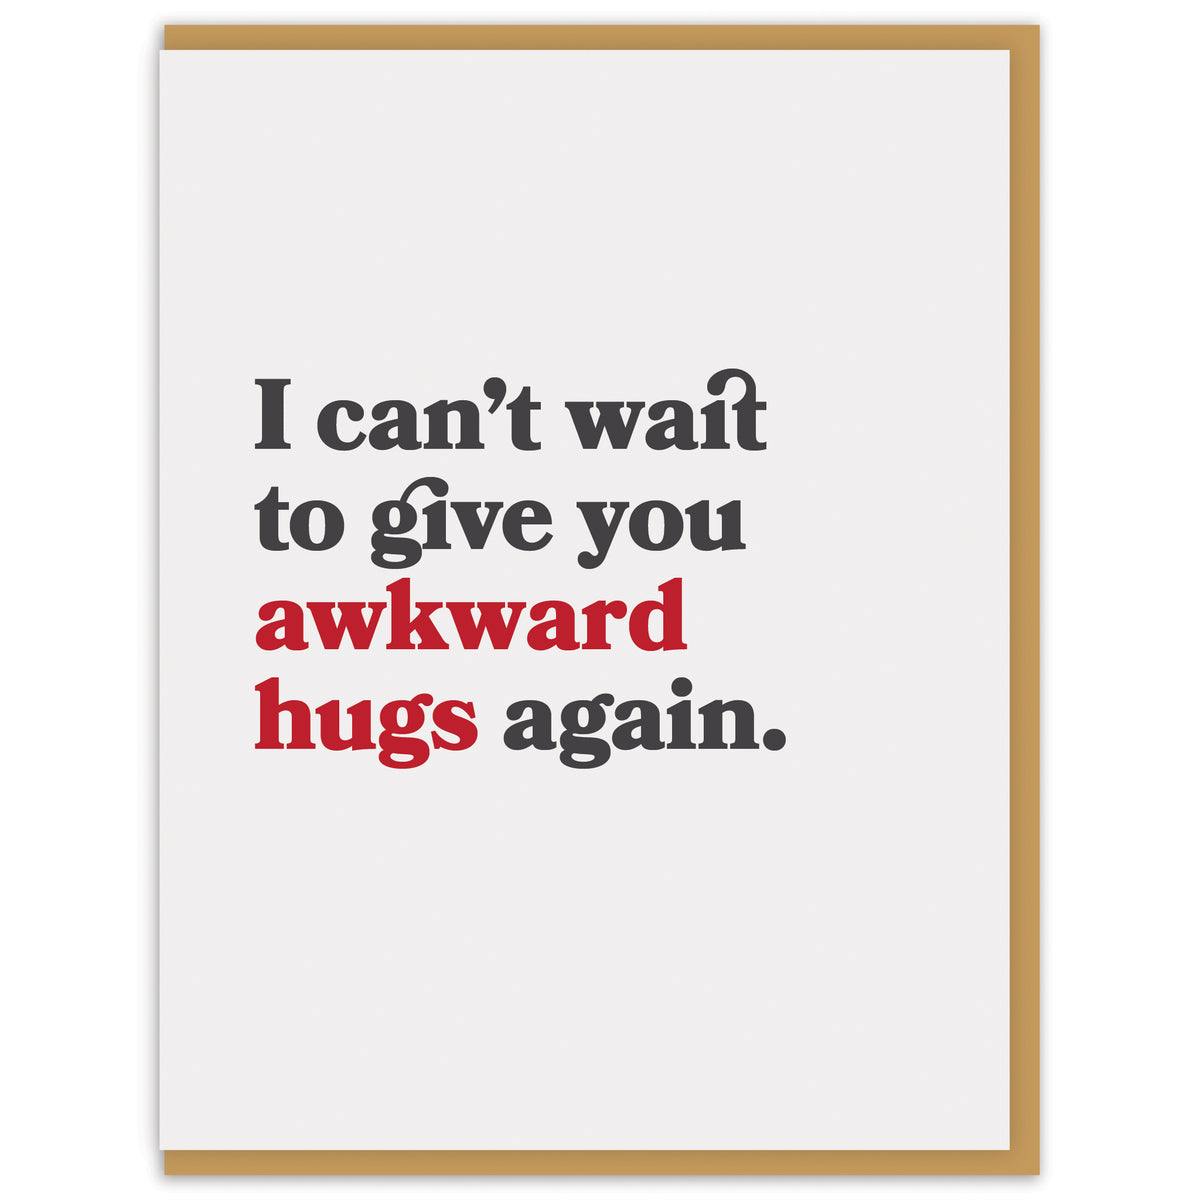 I can’t wait to give you awkward hugs again.